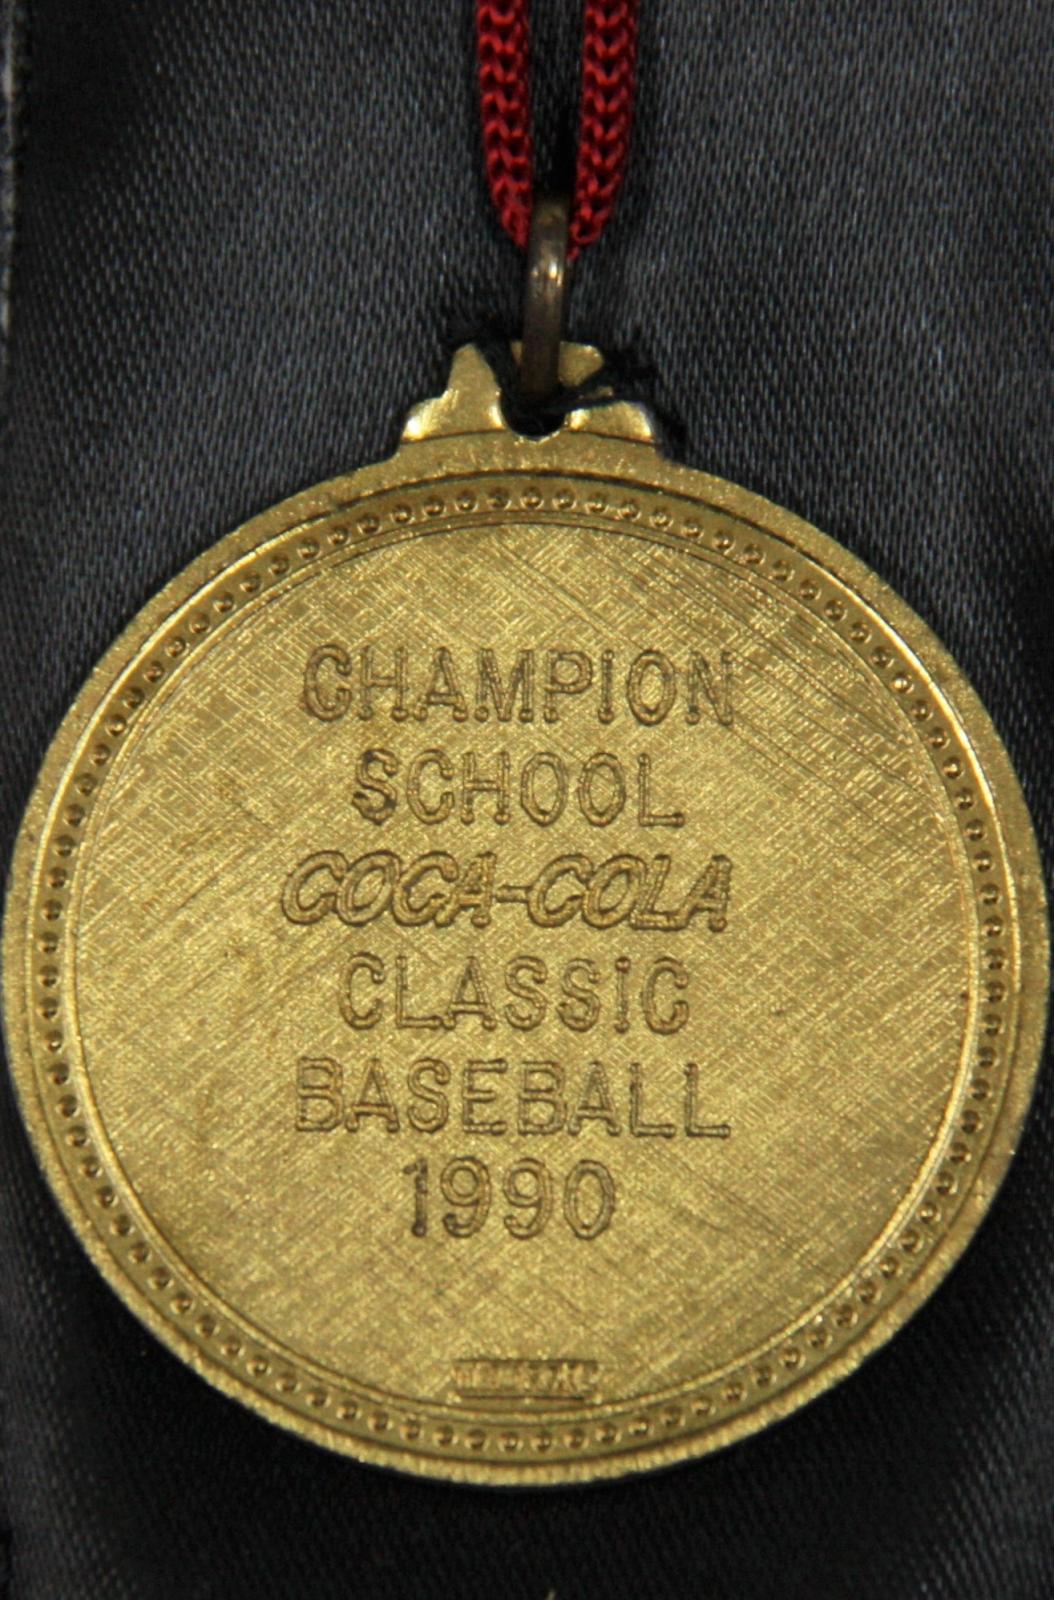 1990 W.A. Government Schools' Sports Association medallion (reverse)